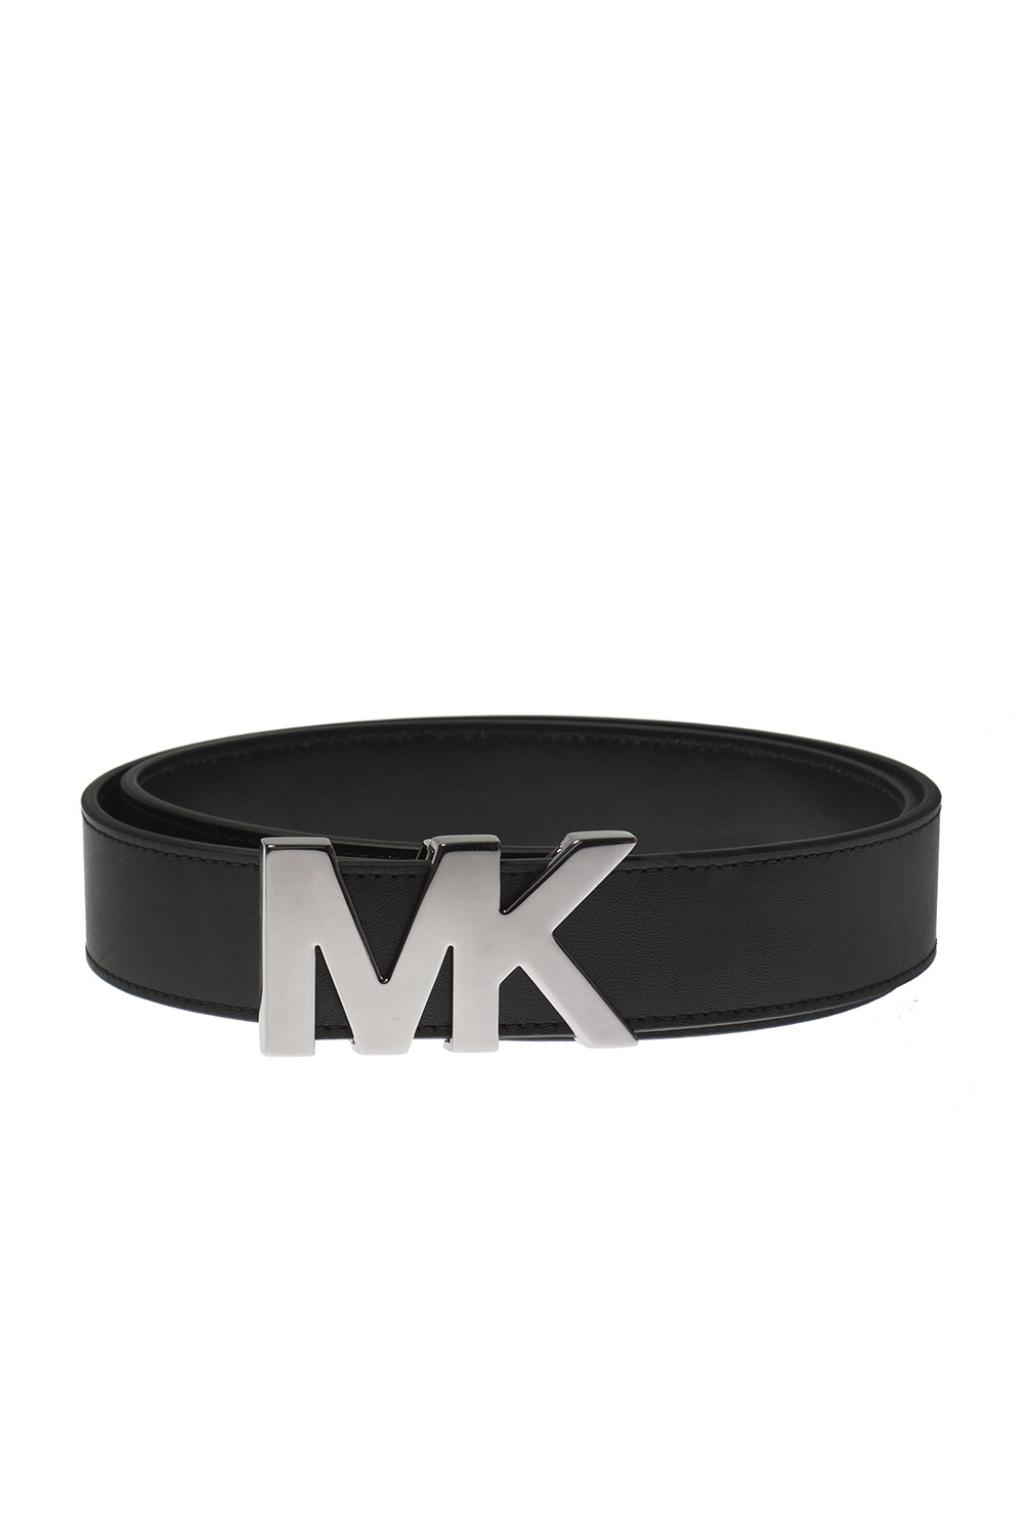 michael kors black leather belt